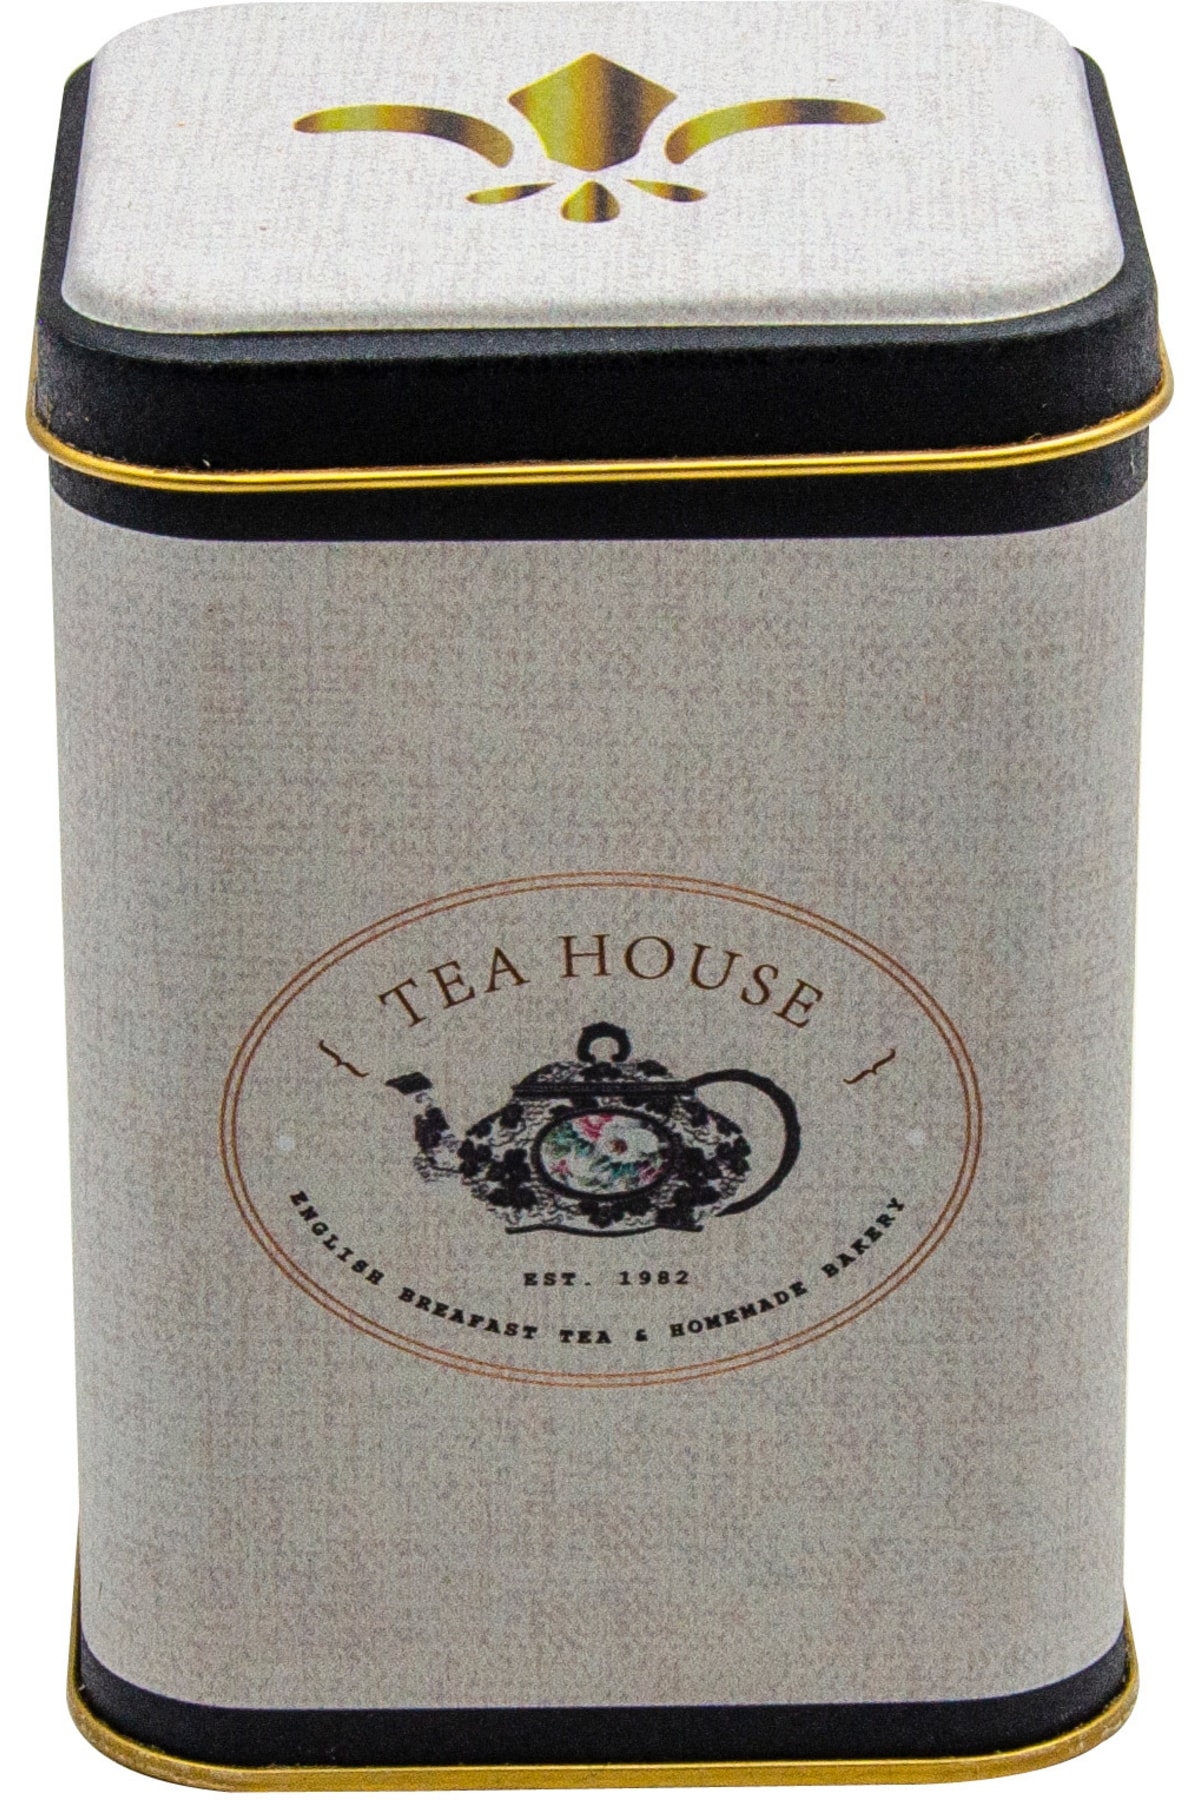 Azura Tea Desenli Kare Metal Kutu, 9 x 9 x 12.5 cm, 1 lt